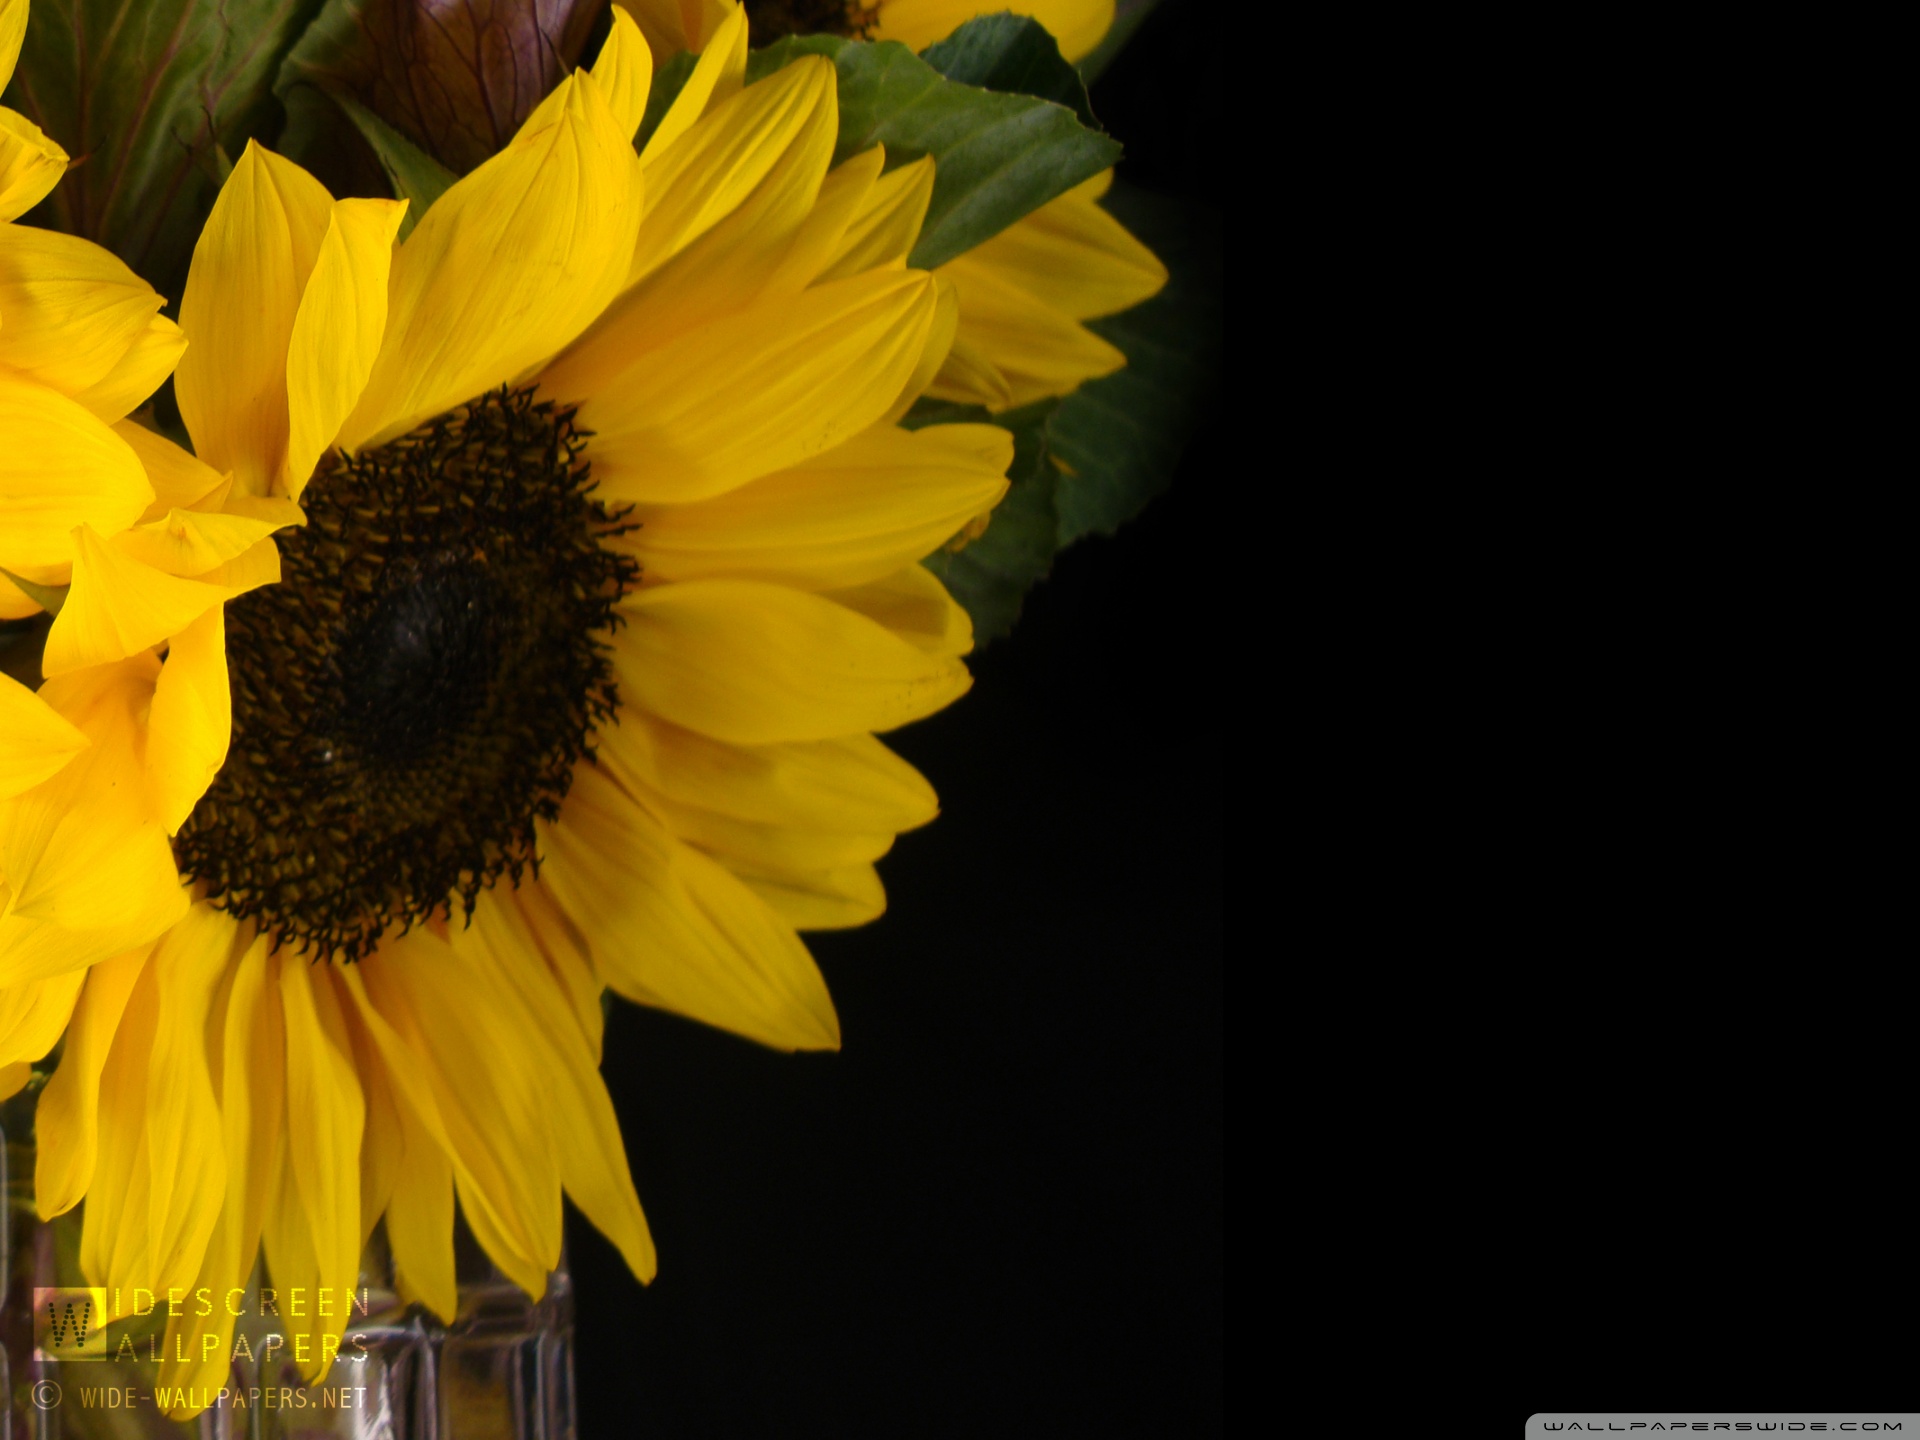 Sunflower and Kale in a Vase Ultra HD Desktop Background Wallpaper for 4K UHD TV, Tablet